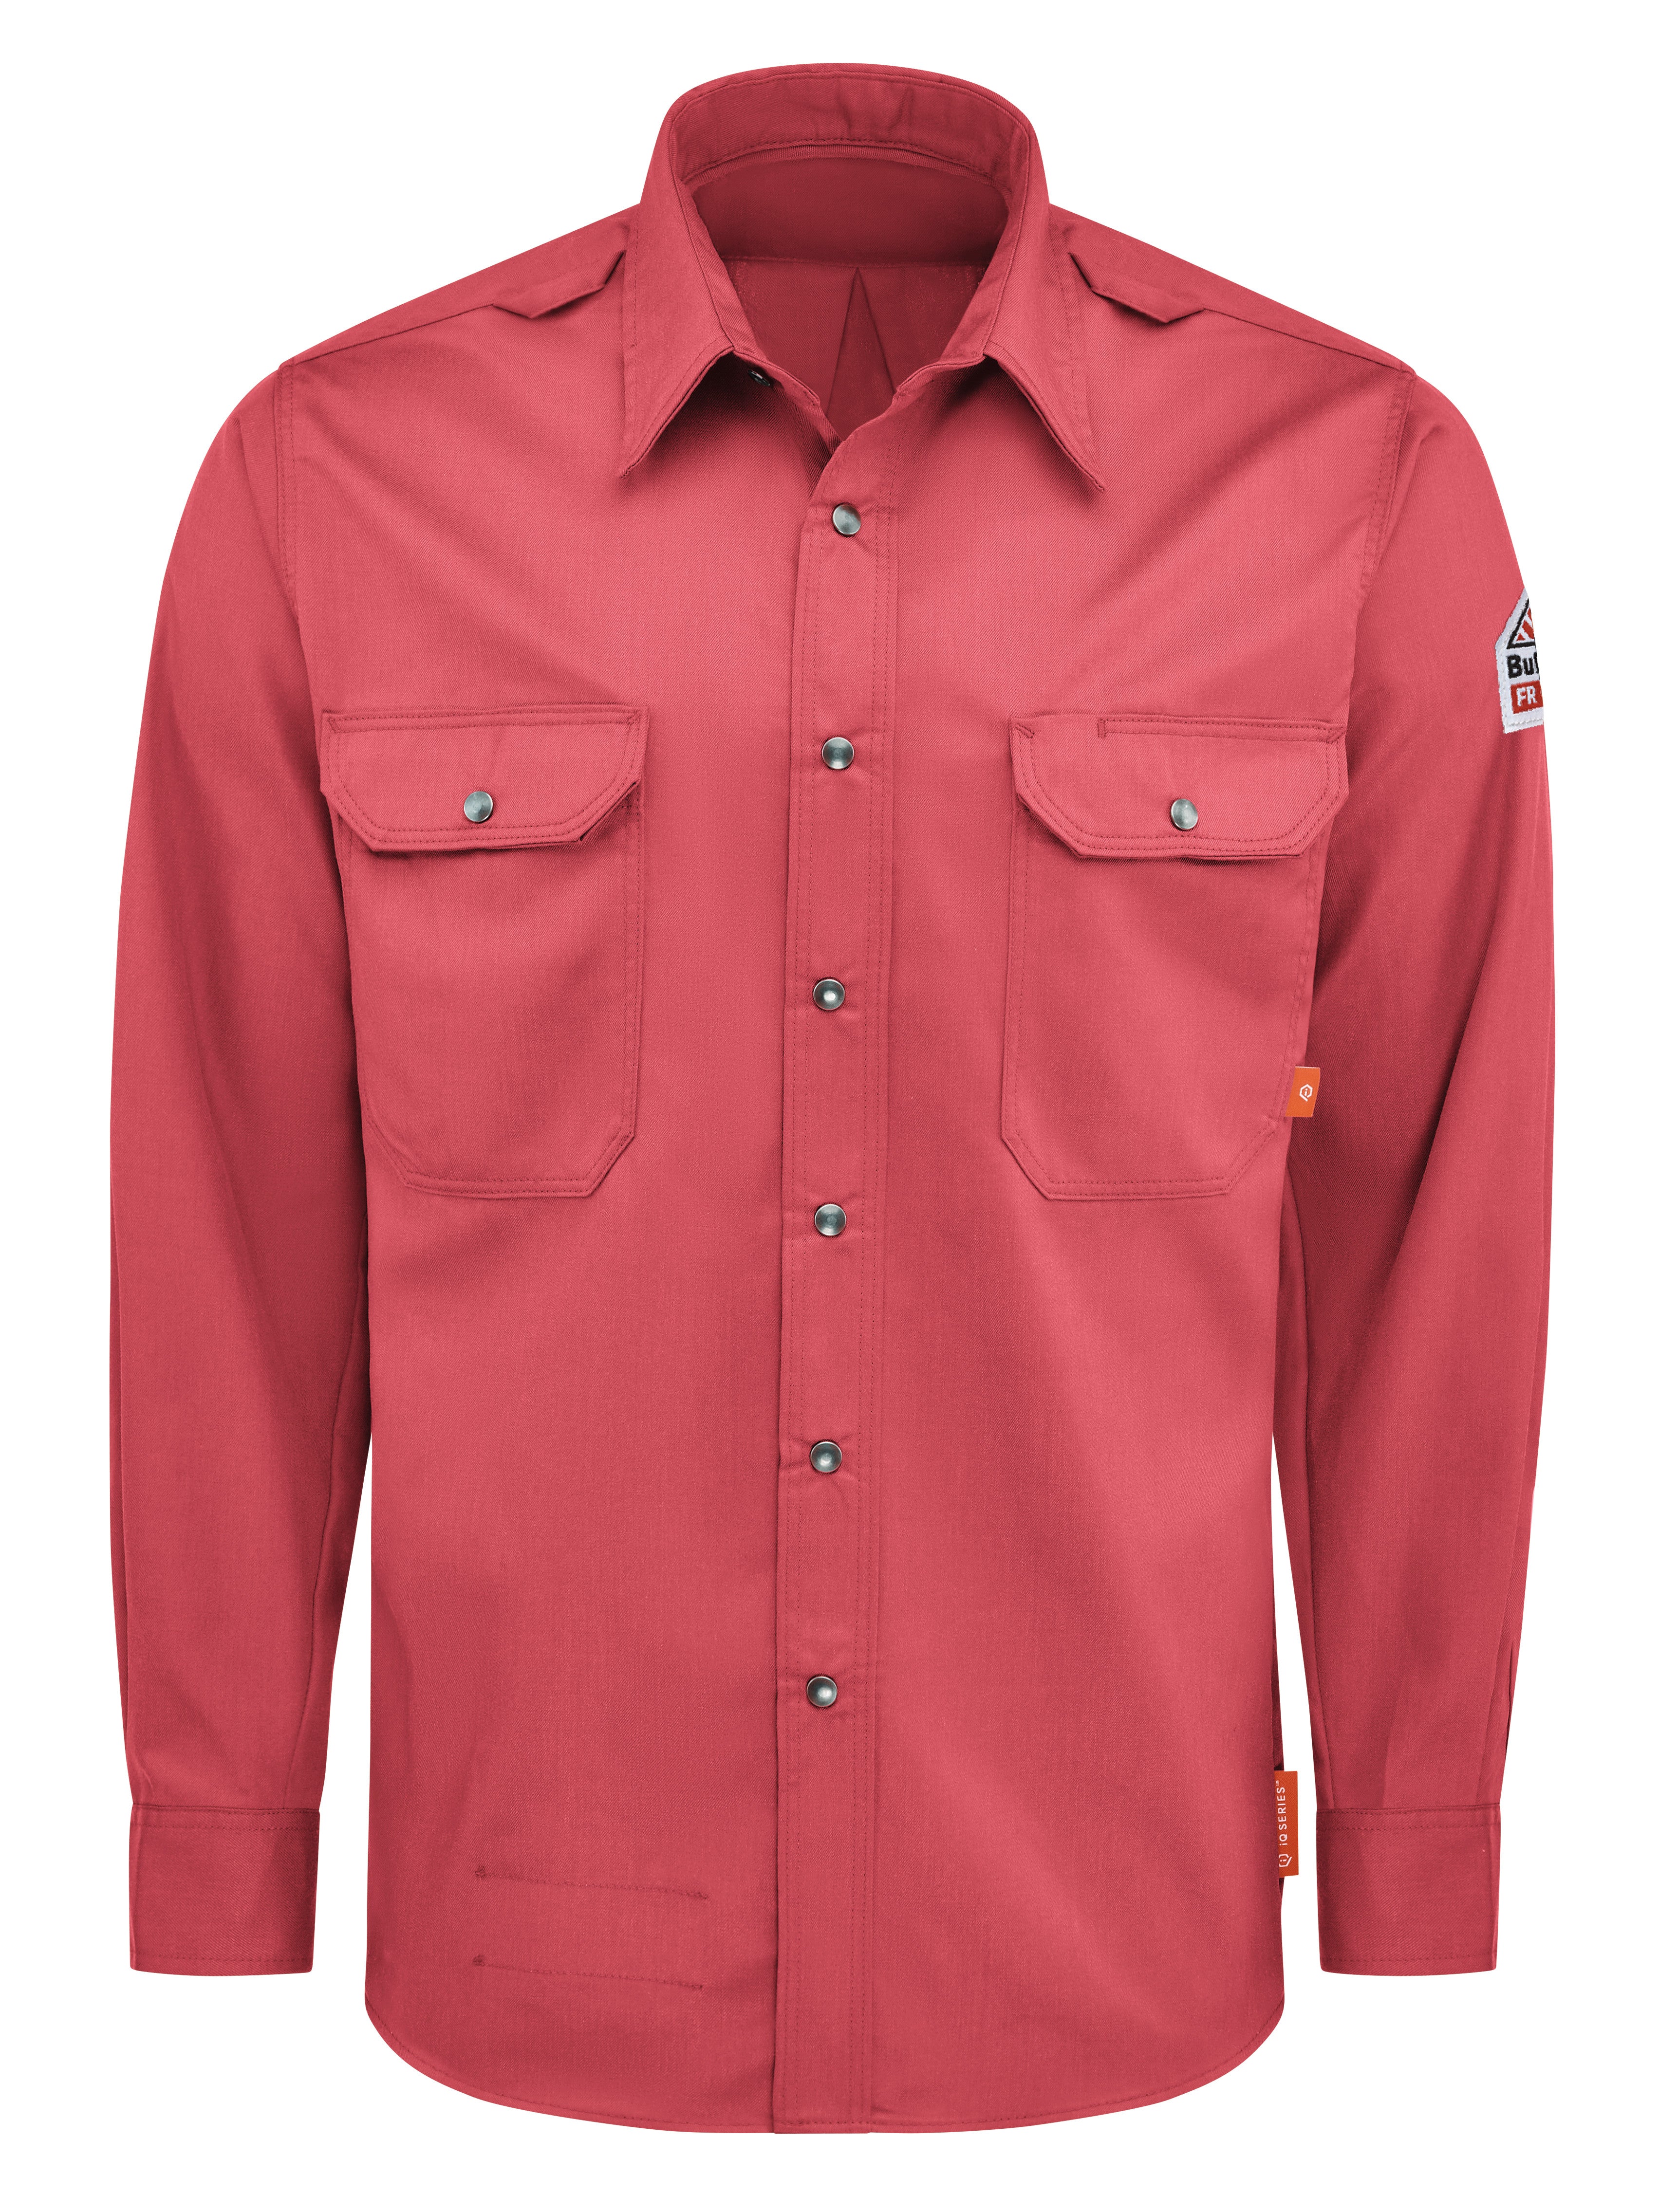 iQ Series® Men's Midweight Comfort Snap-Front Woven Shirt QS28 - Red-eSafety Supplies, Inc